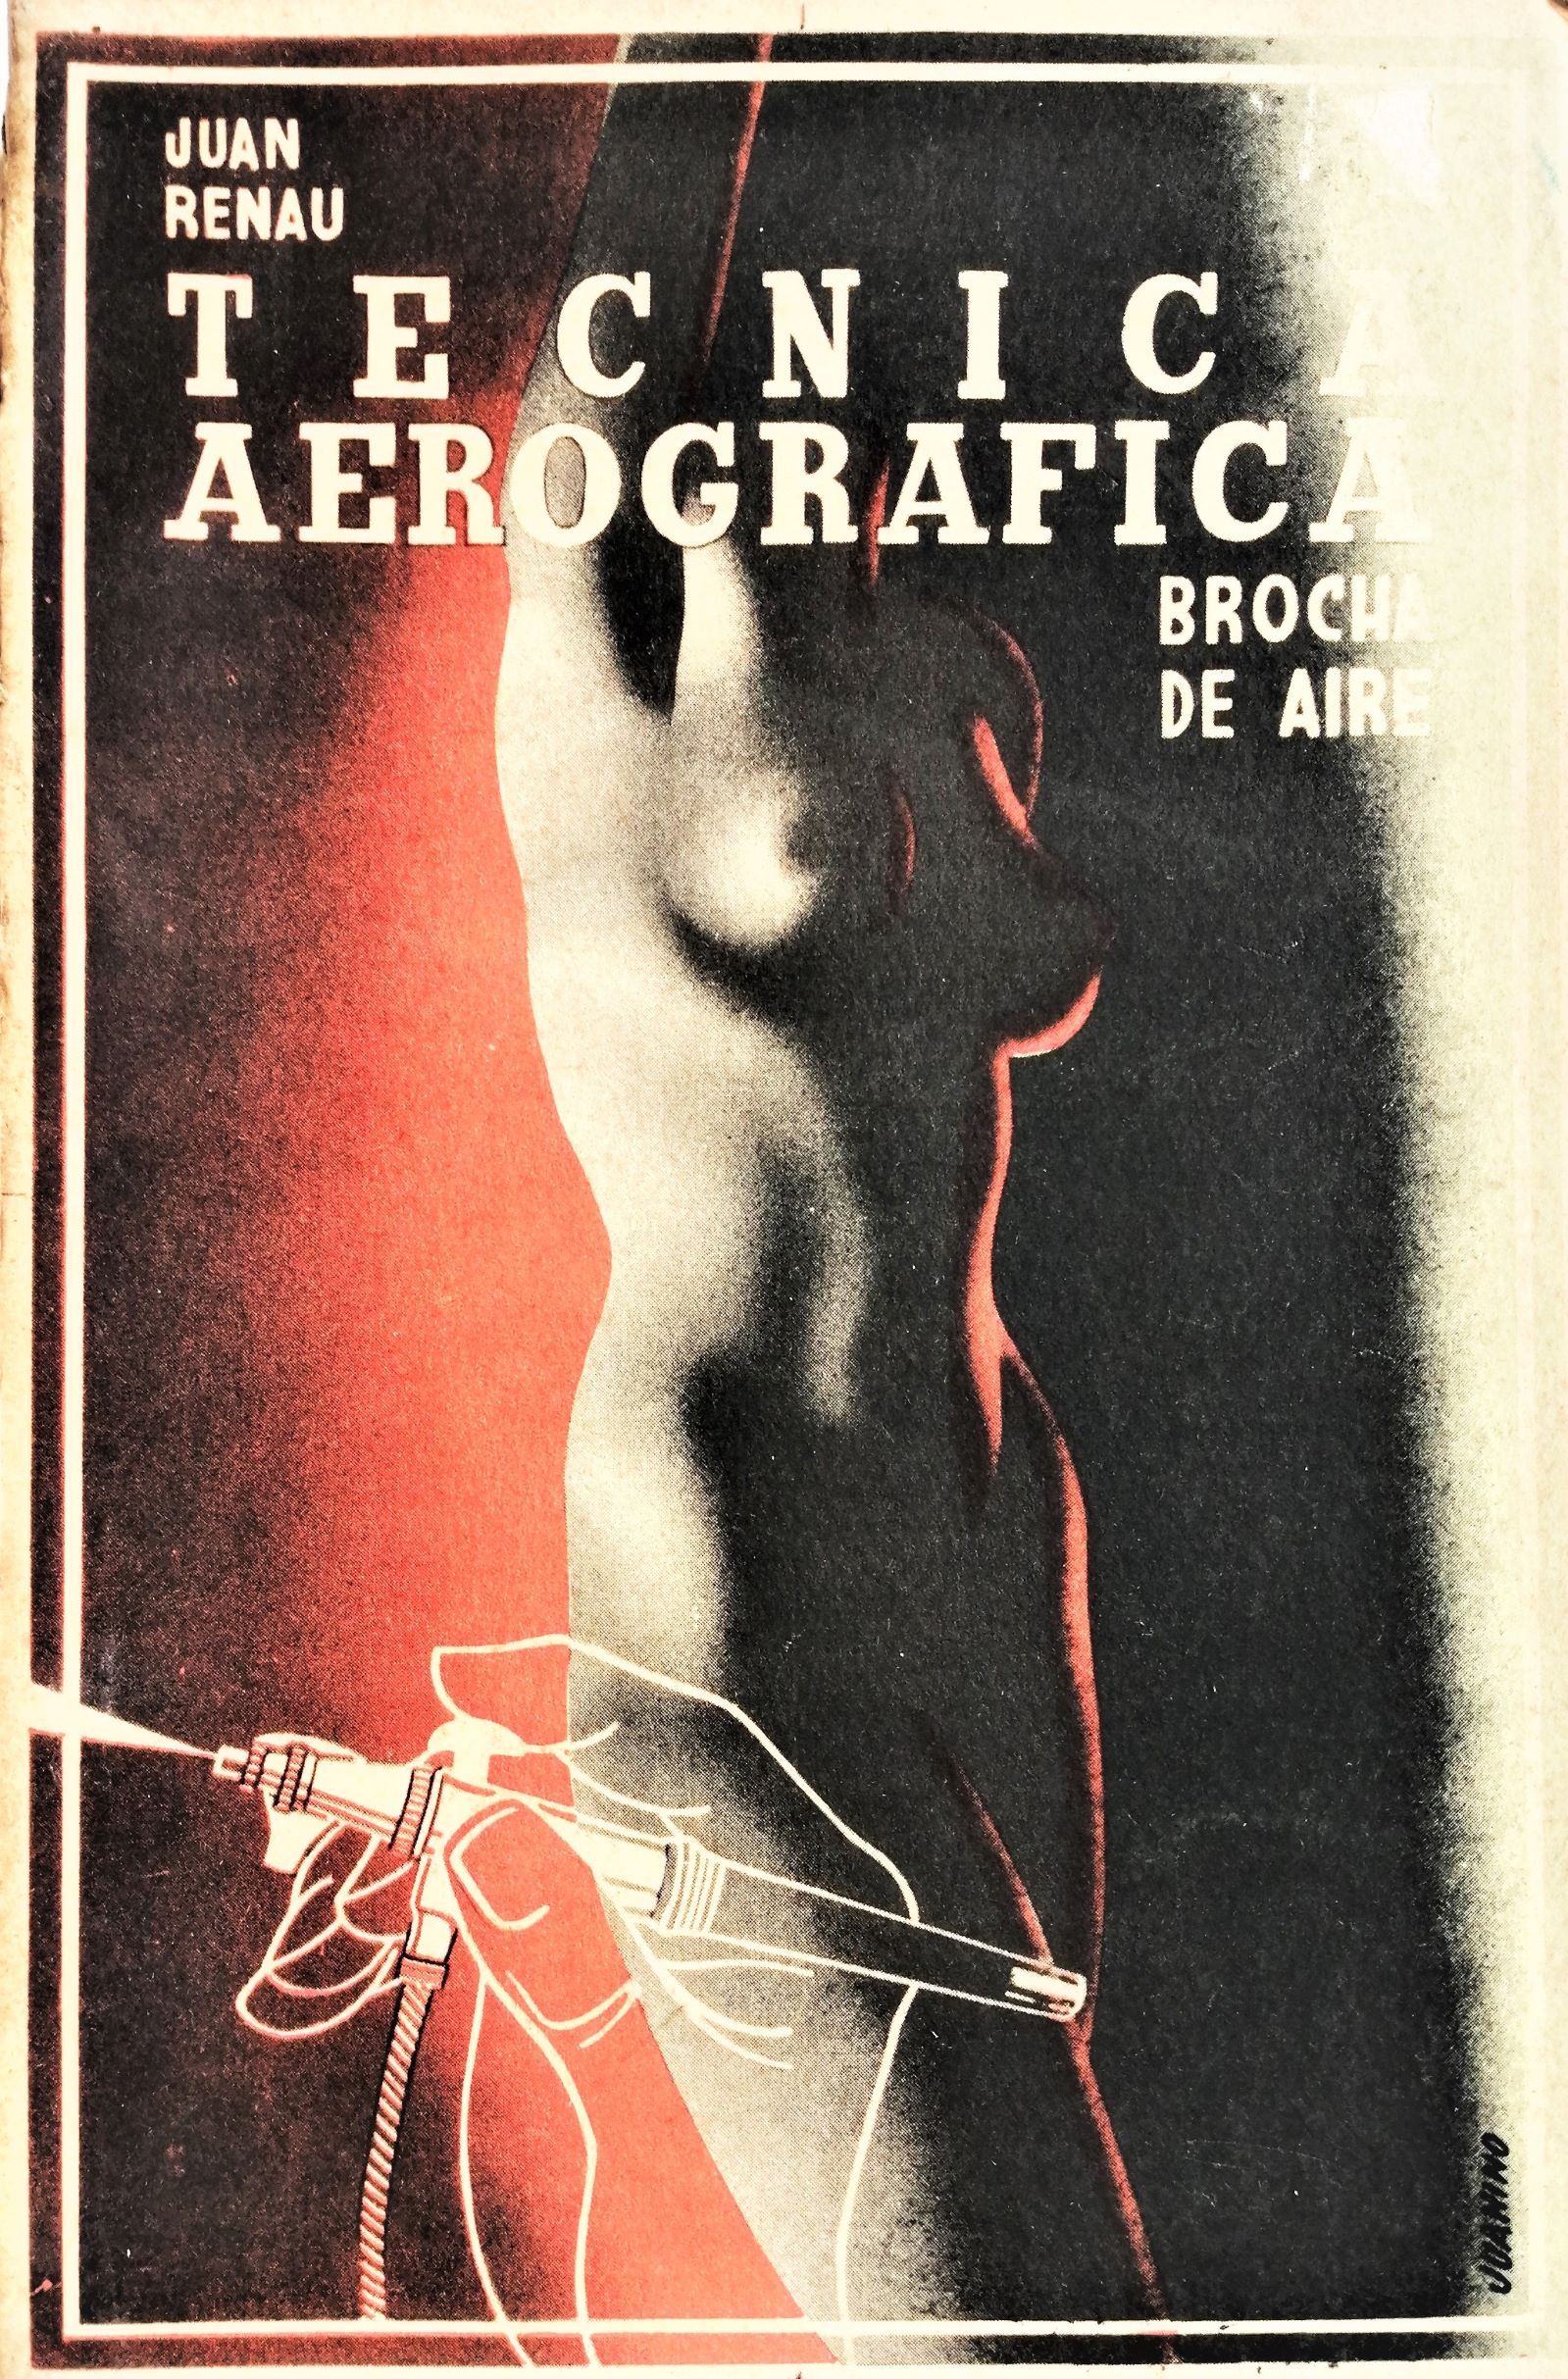 Juan Renau - Tecnica Aerografica (La brocha de aire)